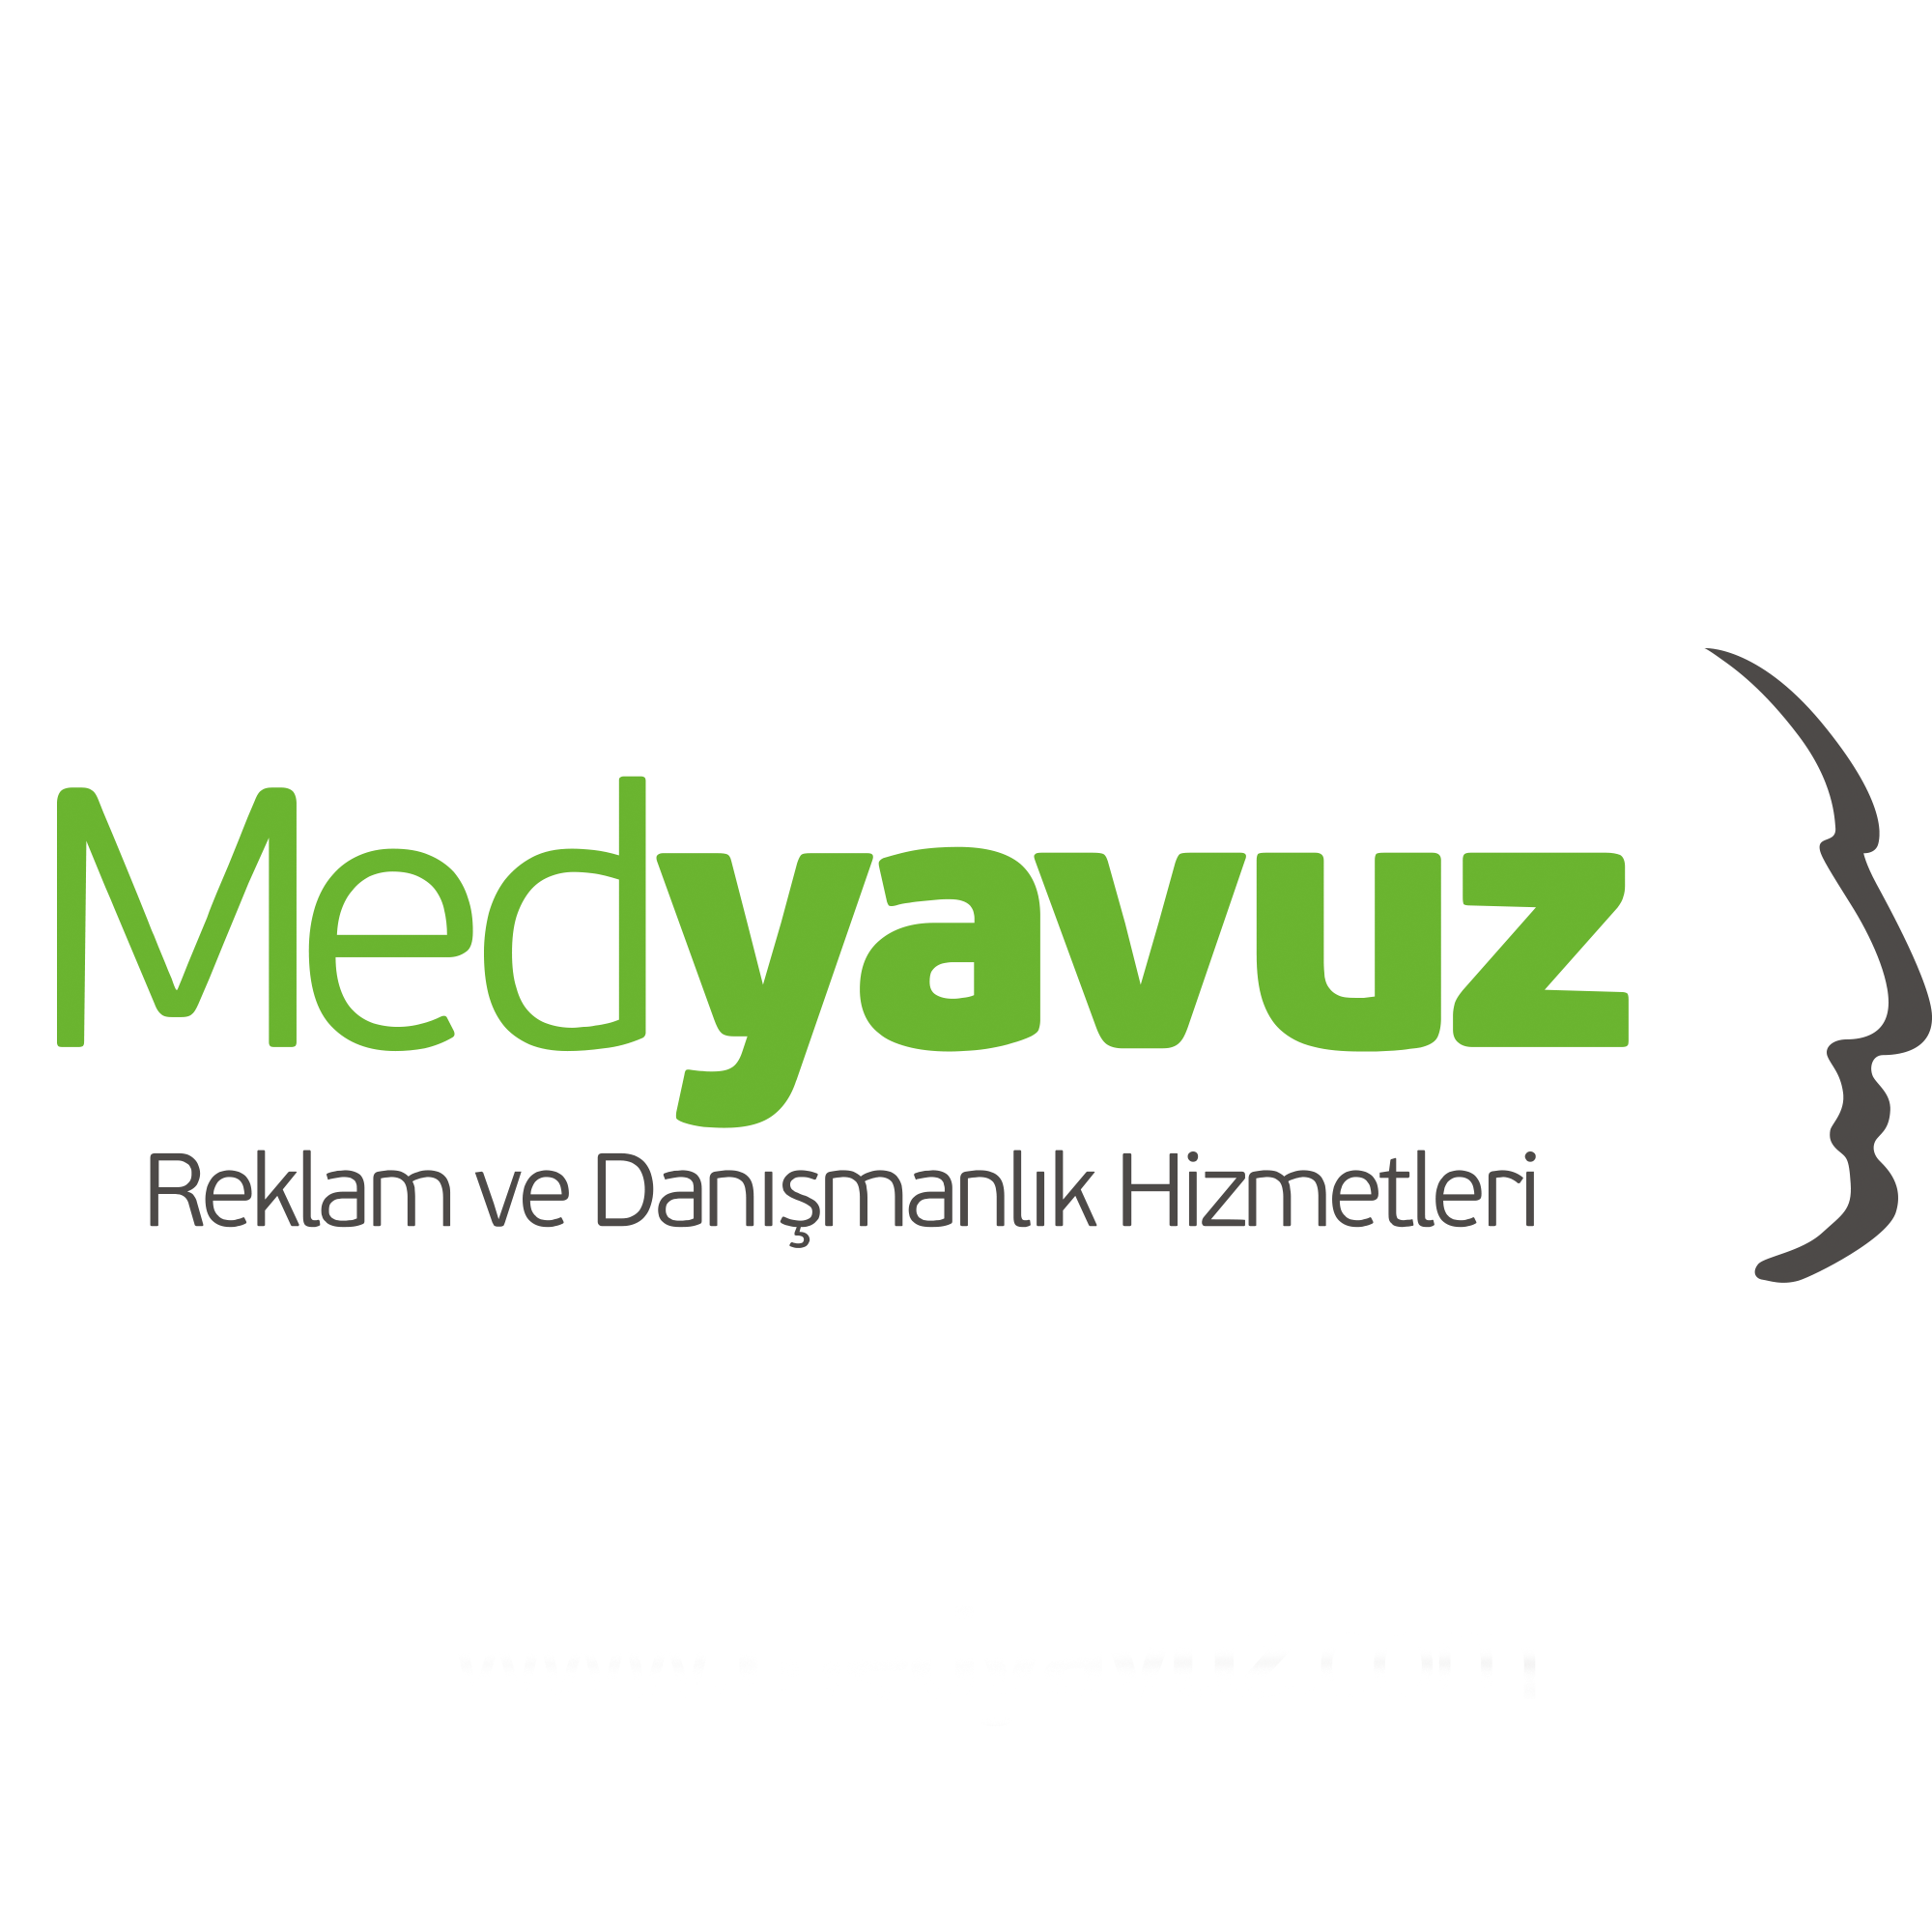 MediaVuz الإعلان والمنظمة العادلة الدولية